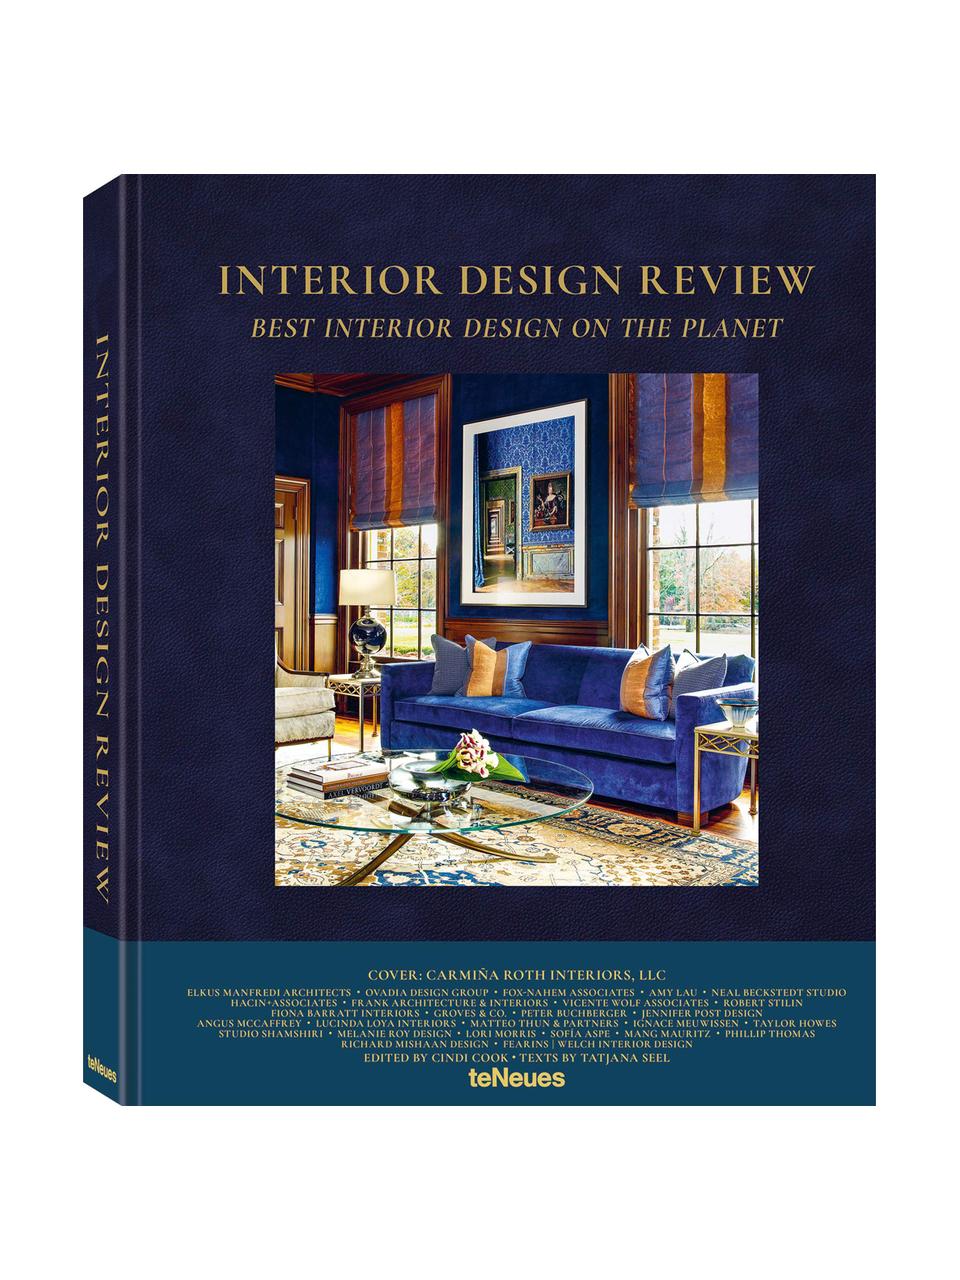 Album Interior Design Review, Papier, twarda okładka, Wielobarwny, D 32 x S 25 cm